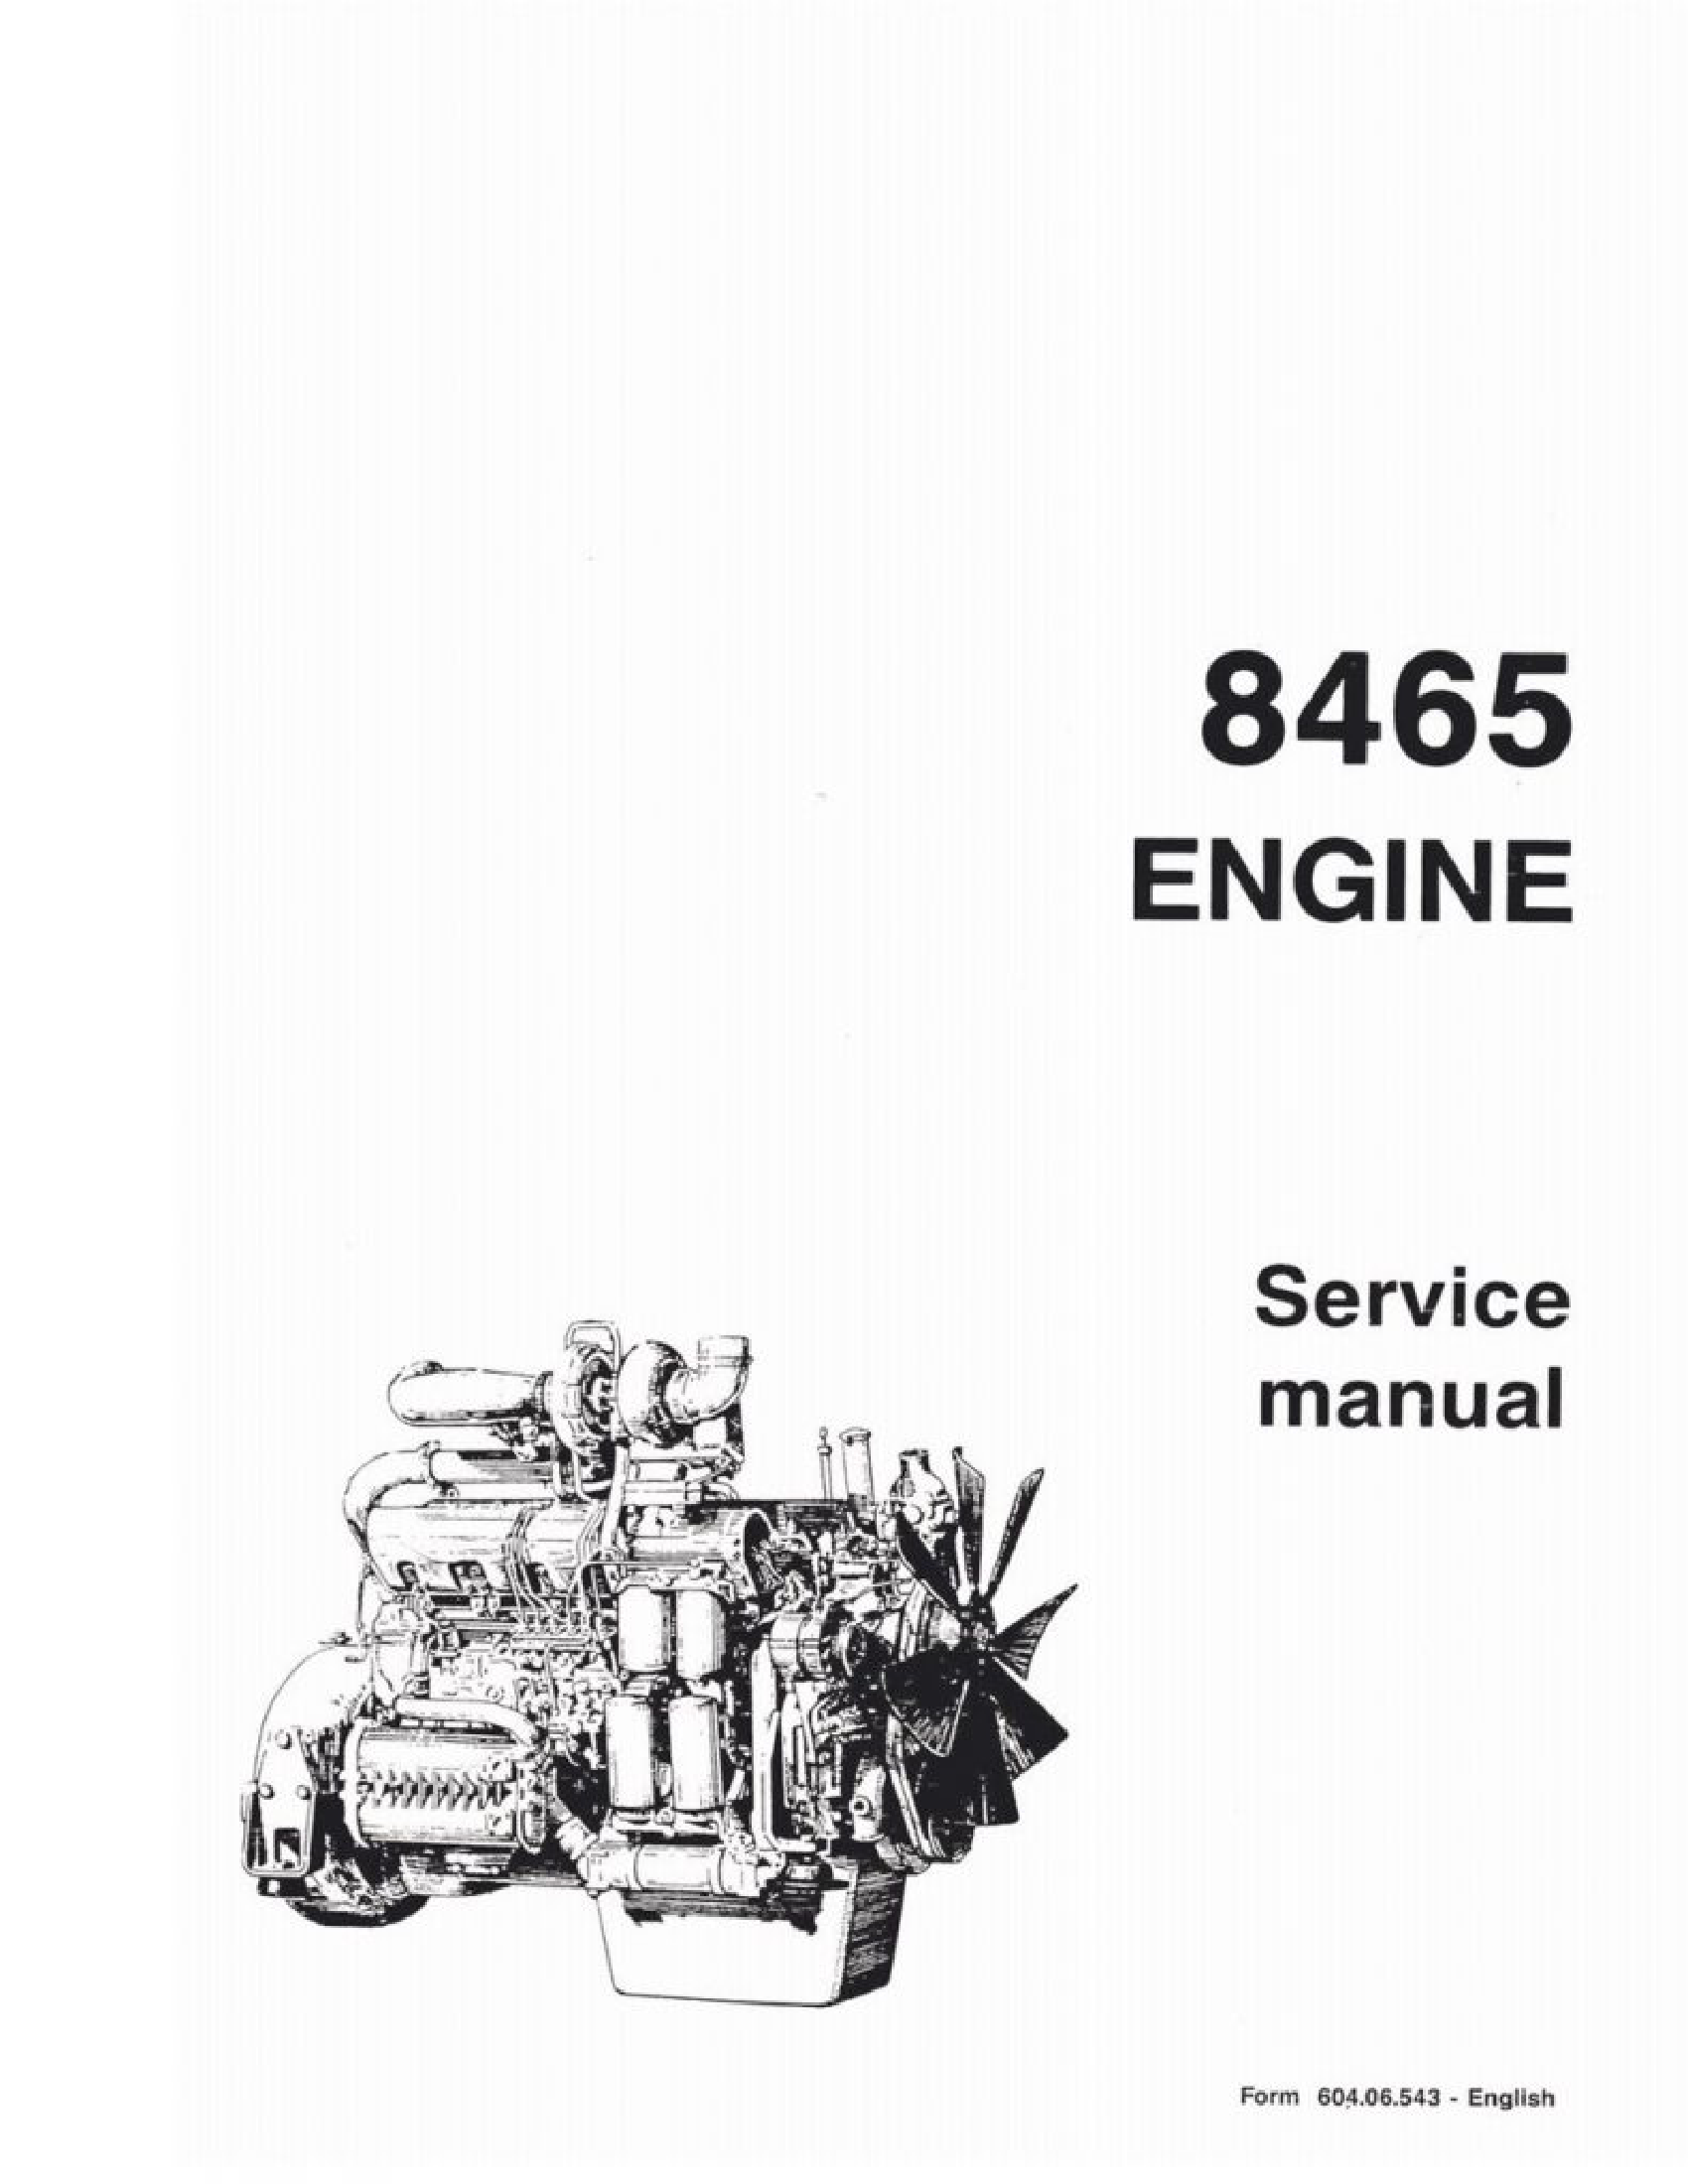 Fiat-Allis 8465 Engine manual